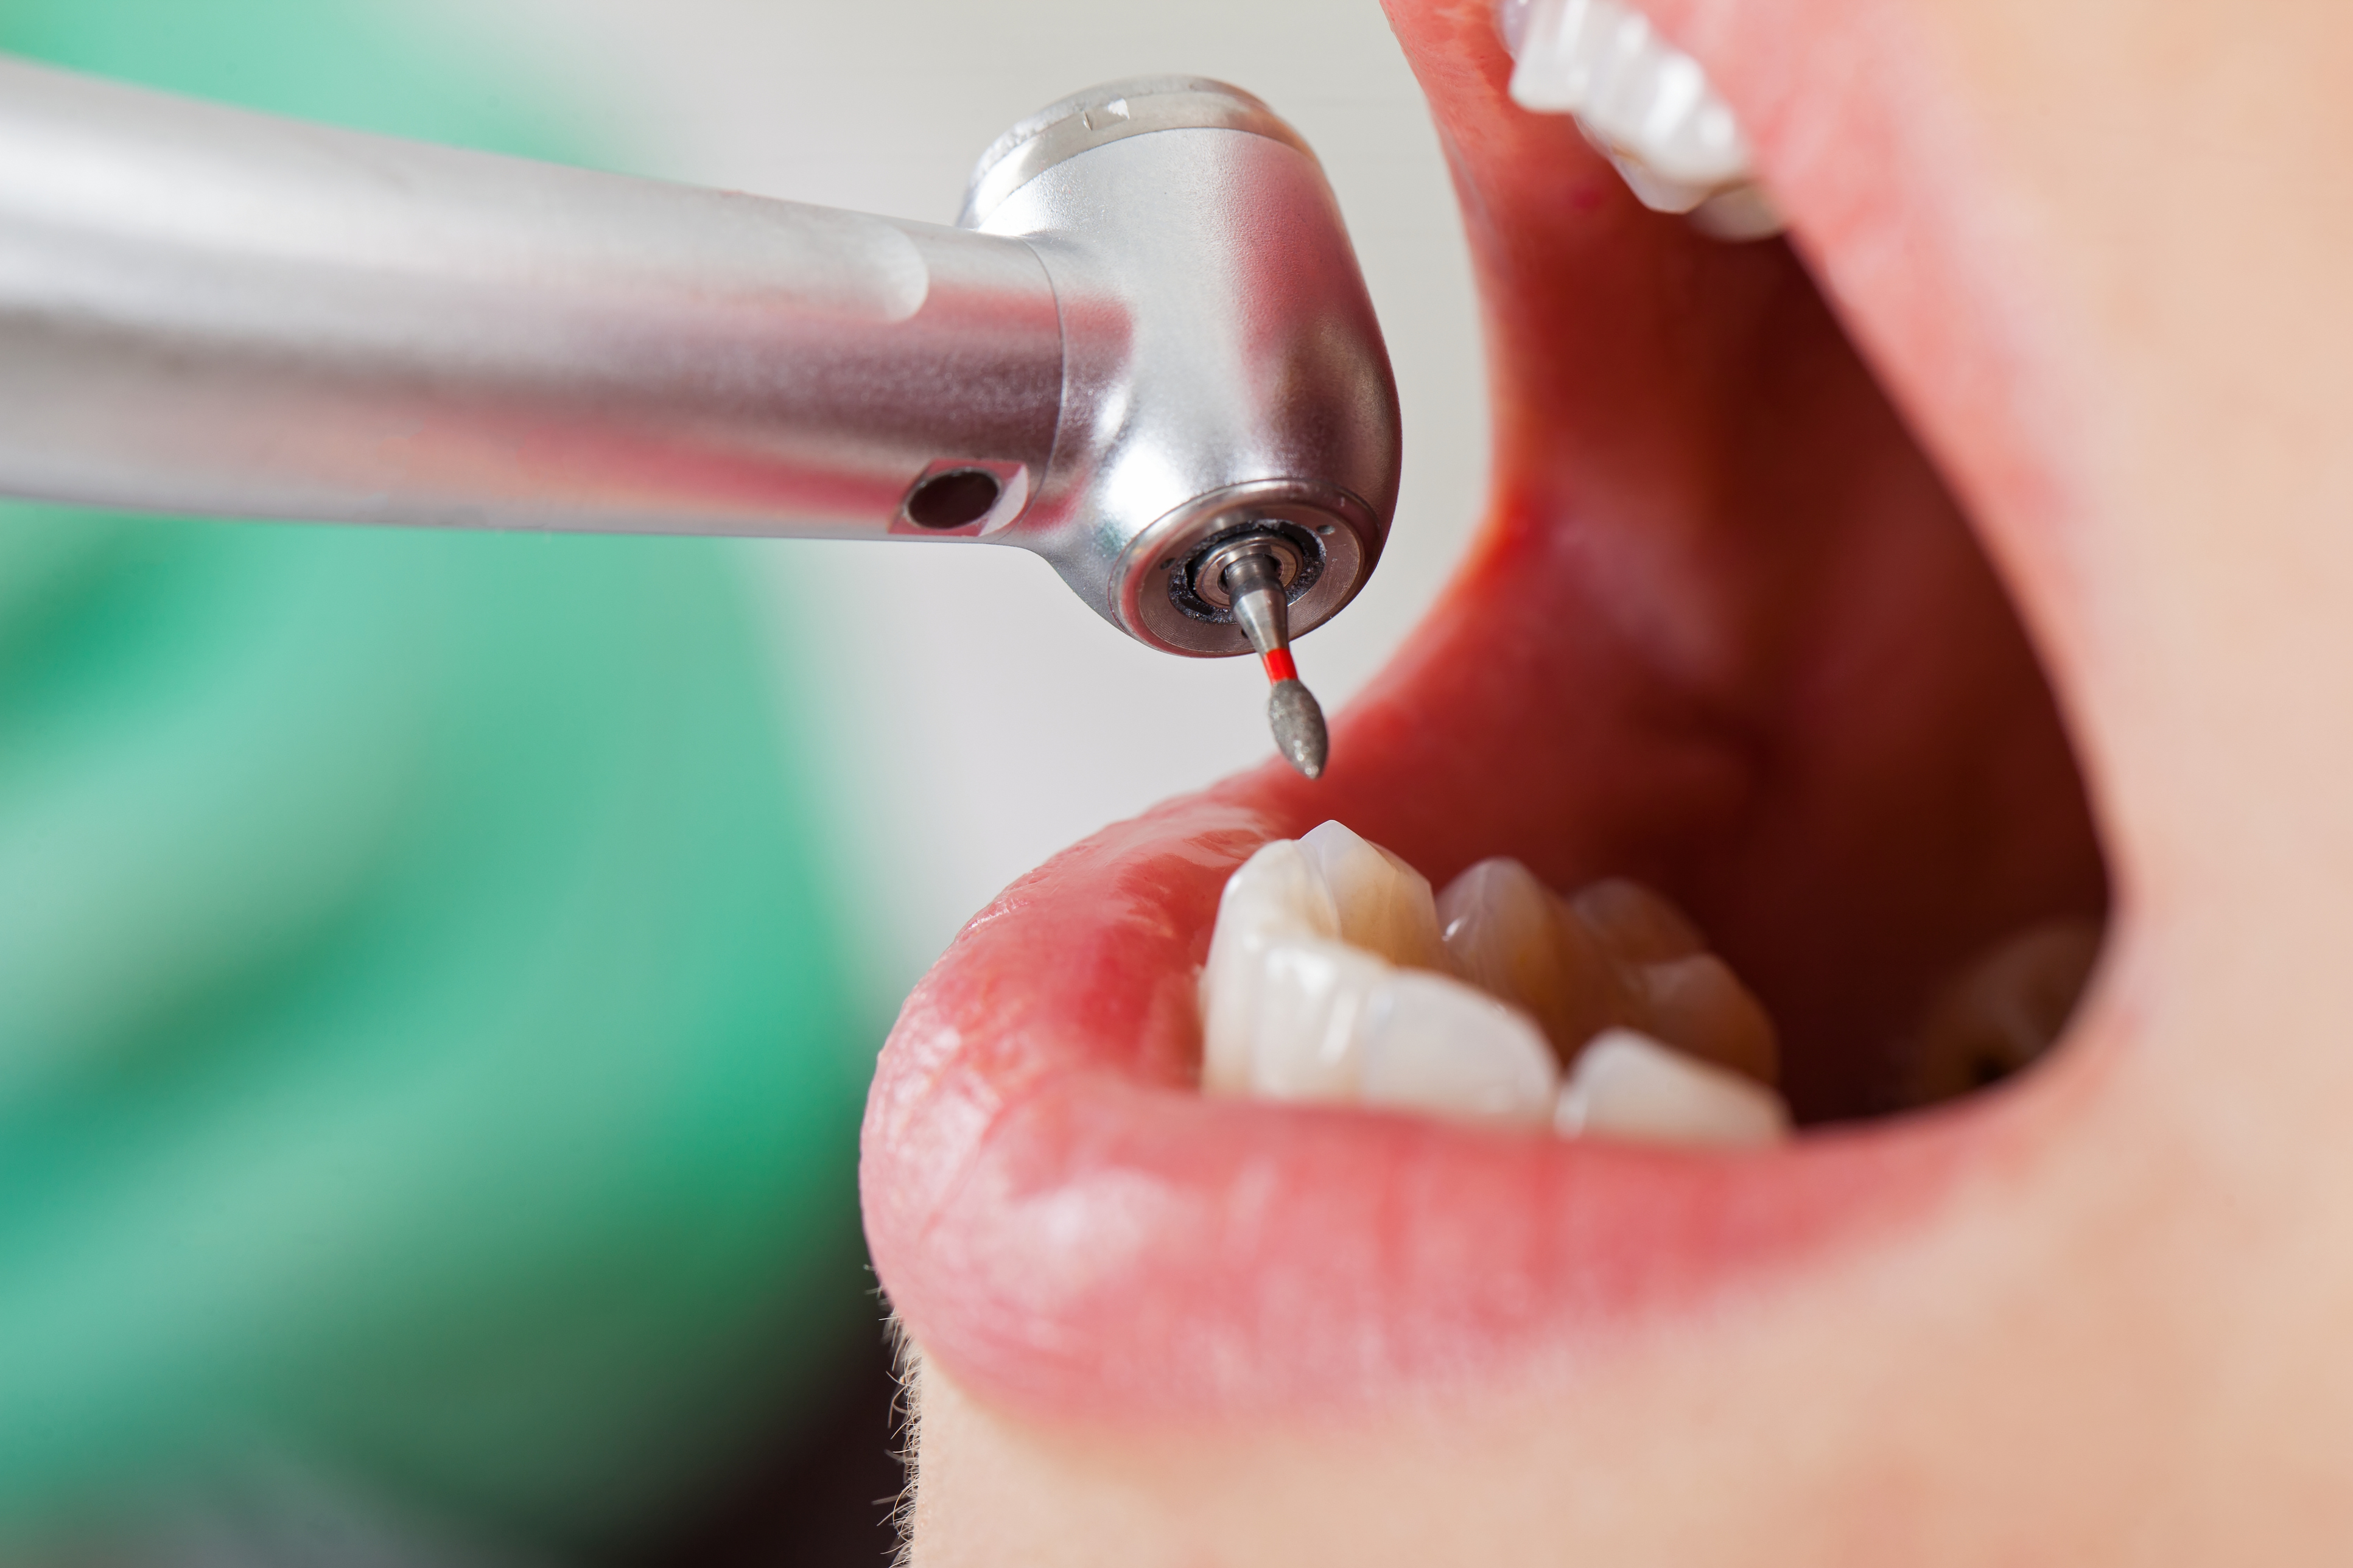 CASE STUDY: Patient Aspirates Foreign Material During Dental Restoration Procedure